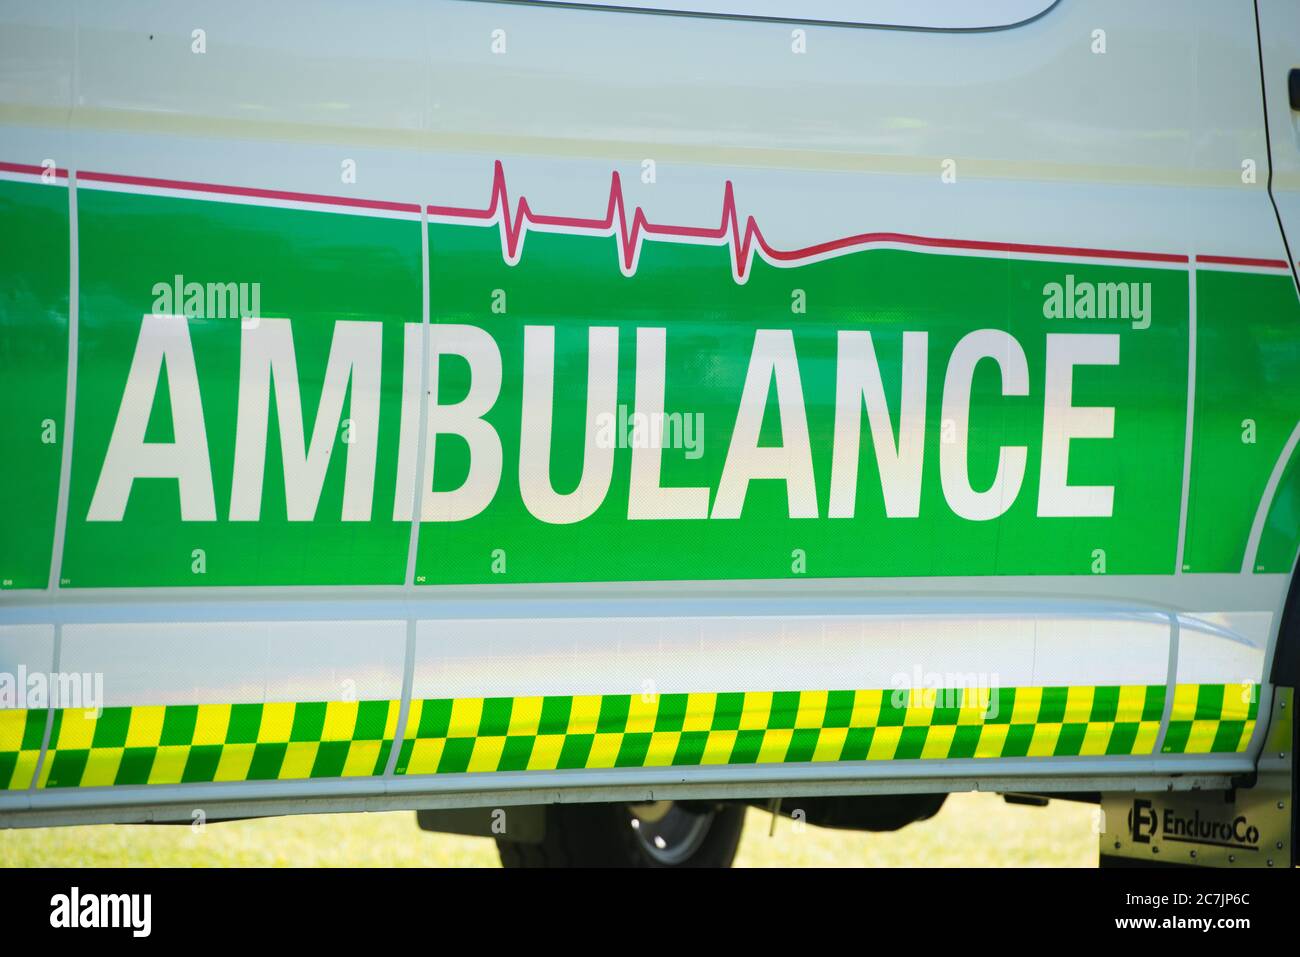 Perth, Australia: 26 November 2017: Close up ambulance transporter for first aid emergency response in Australia. Stock Photo